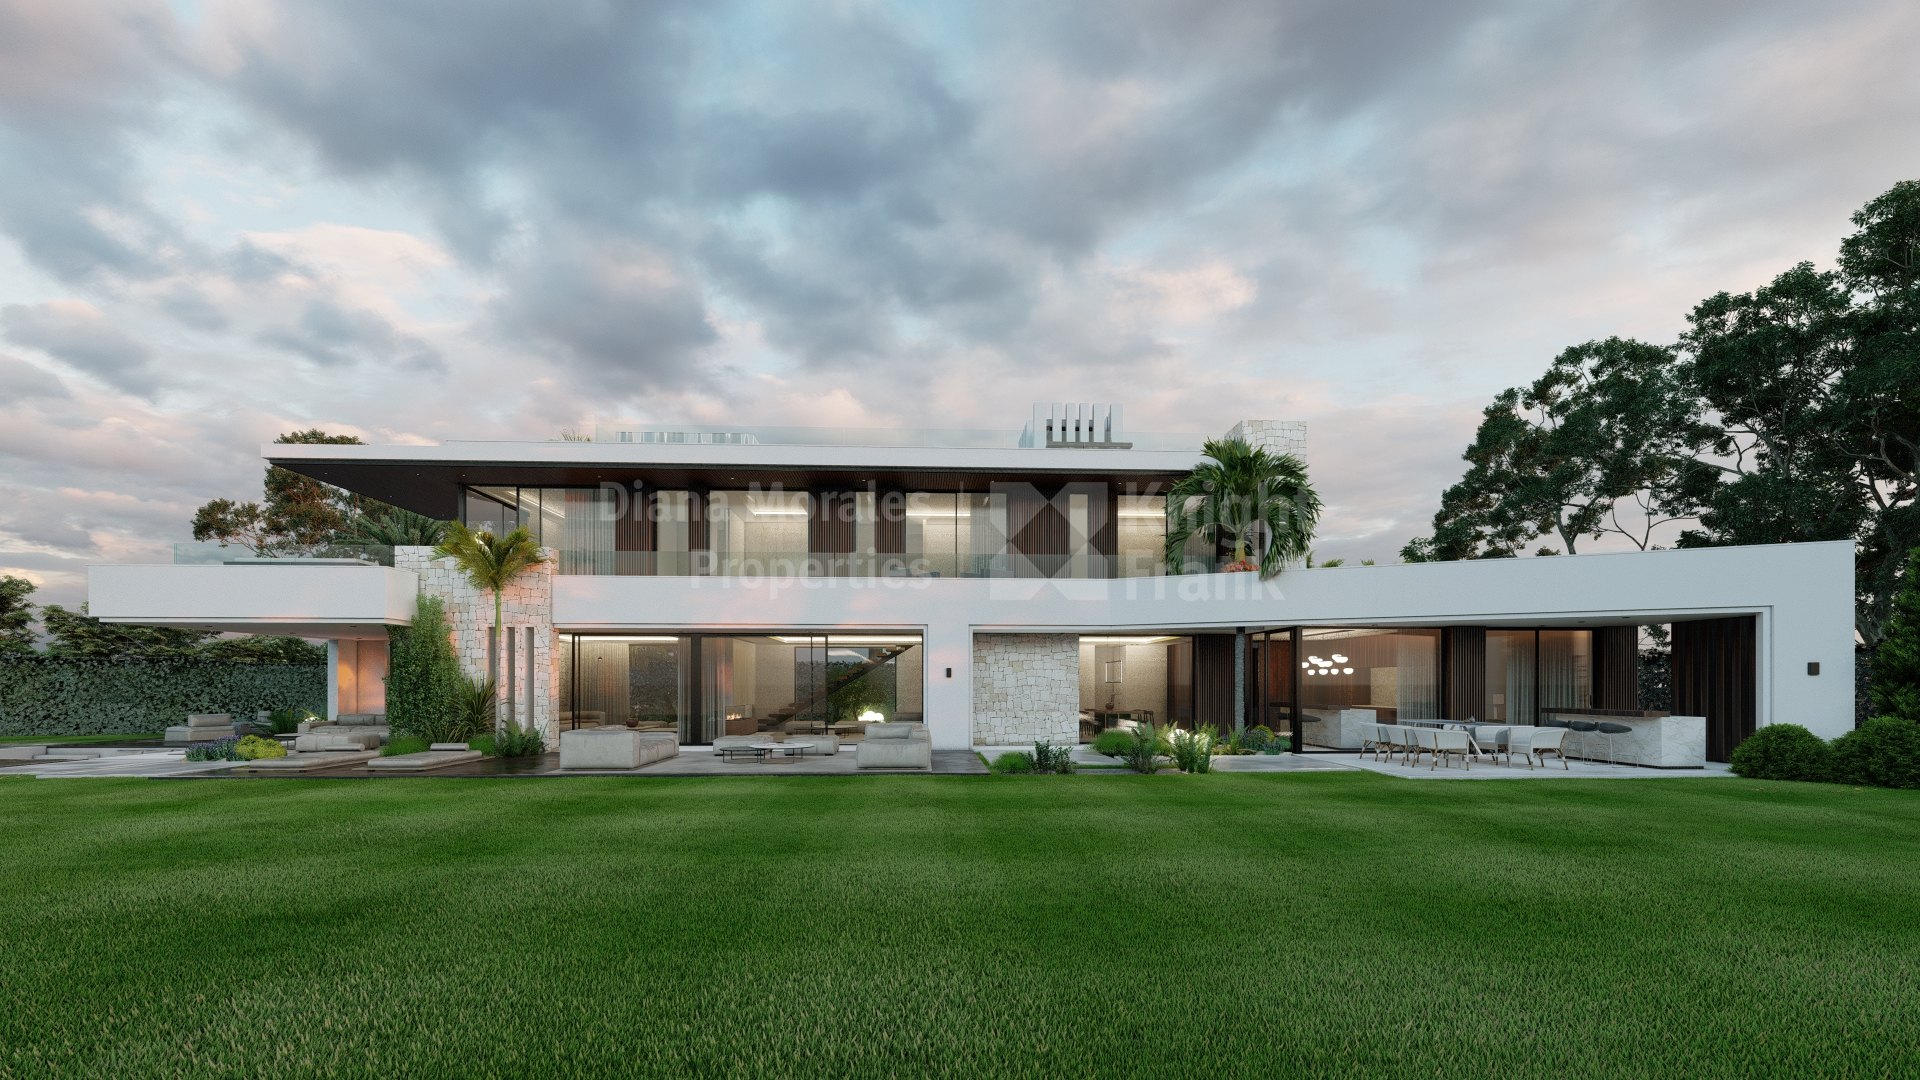 El Saladillo, Turn key project for beachside villa in Playa del Sol, New Golden Mile